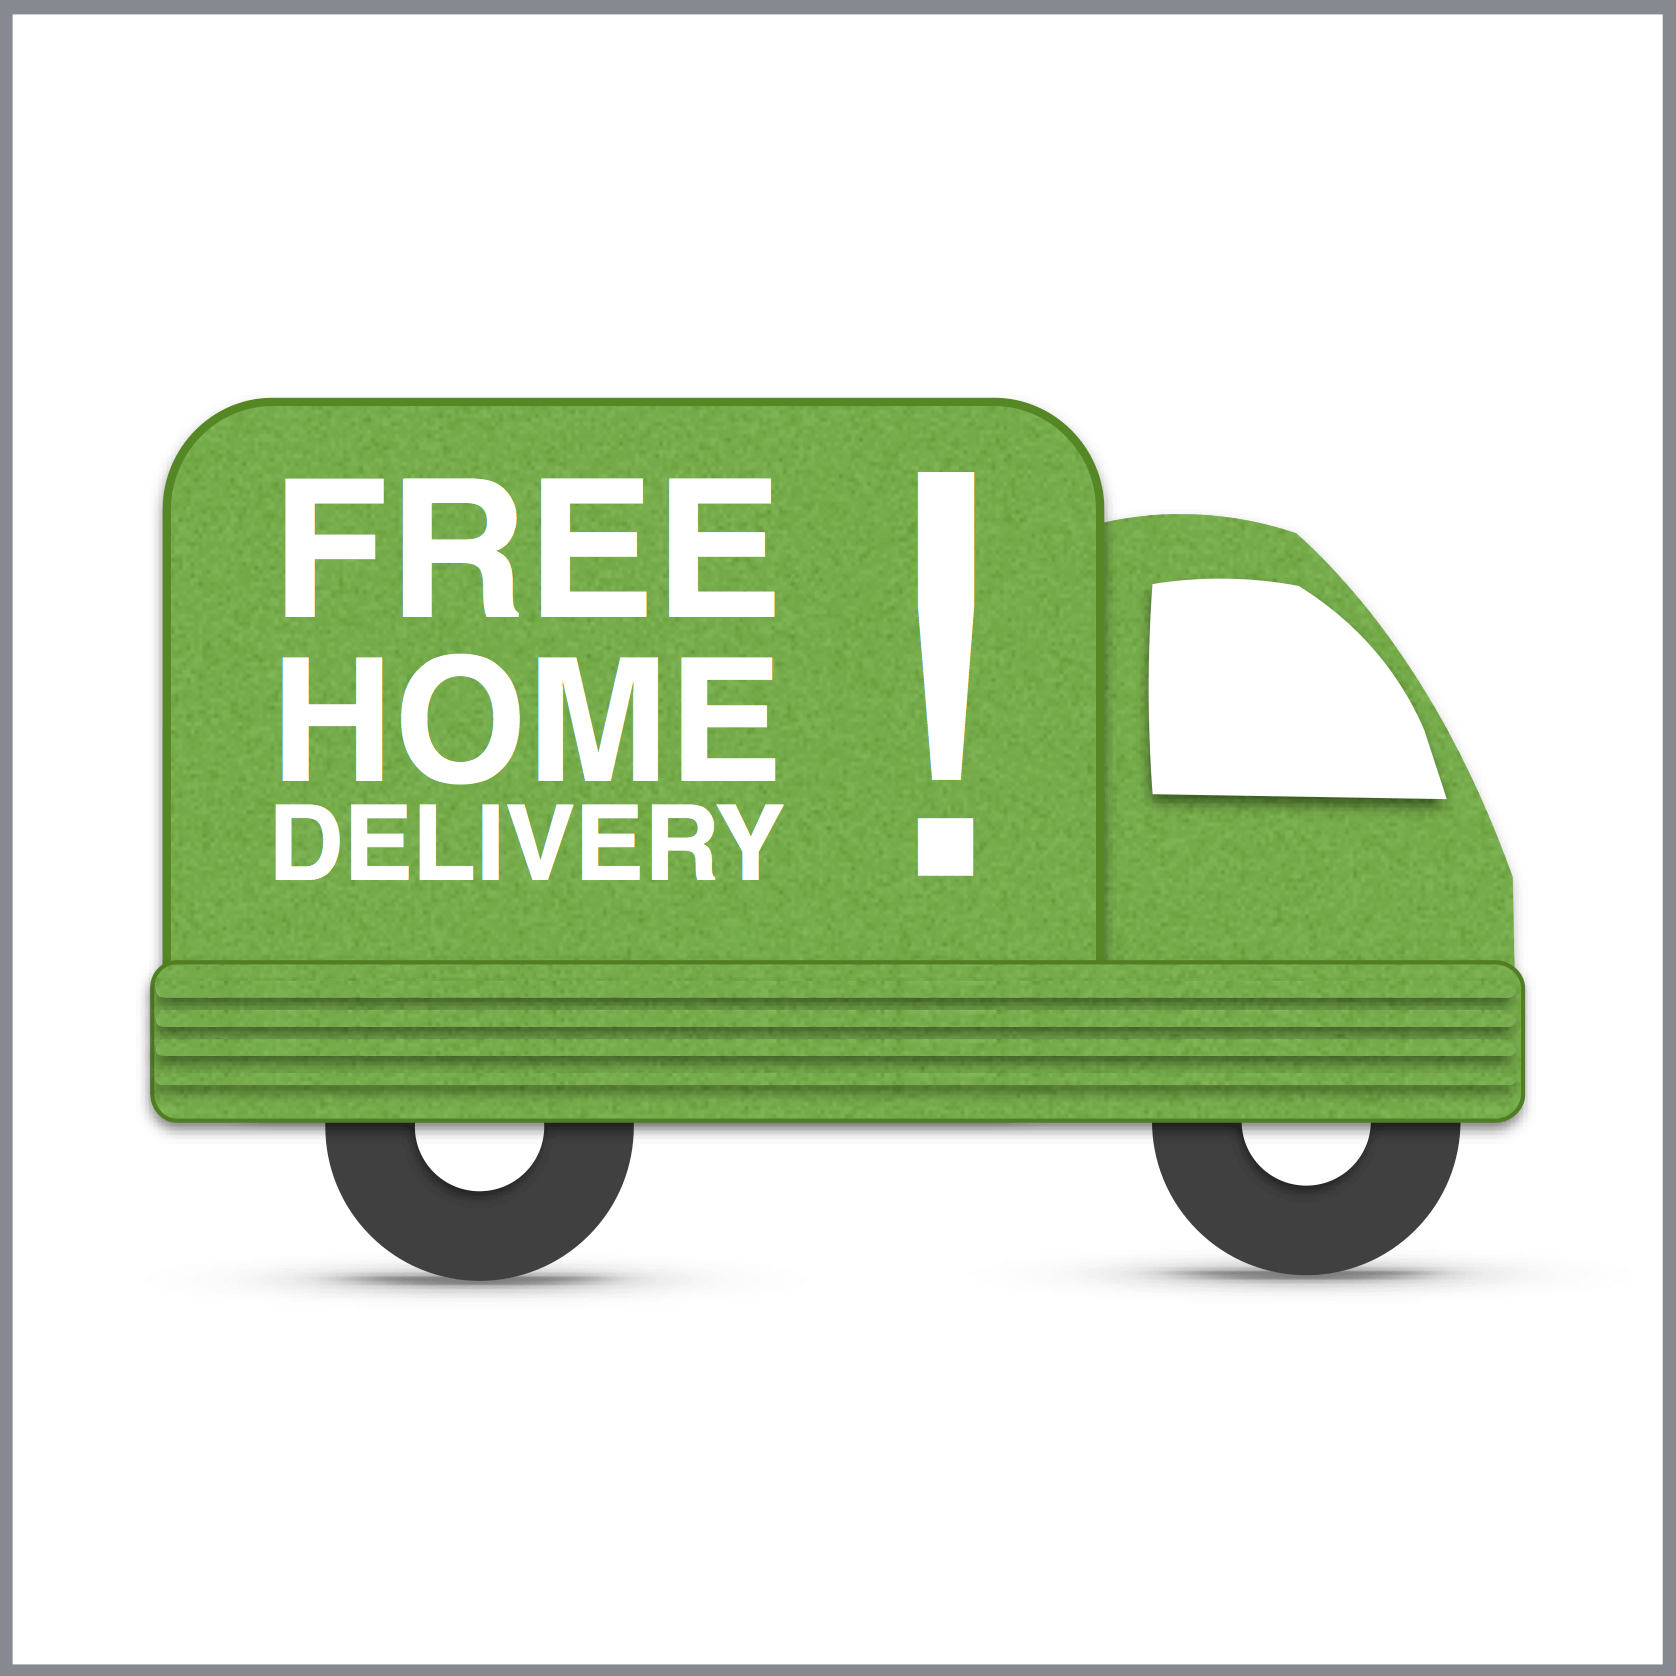 Deliver free instals